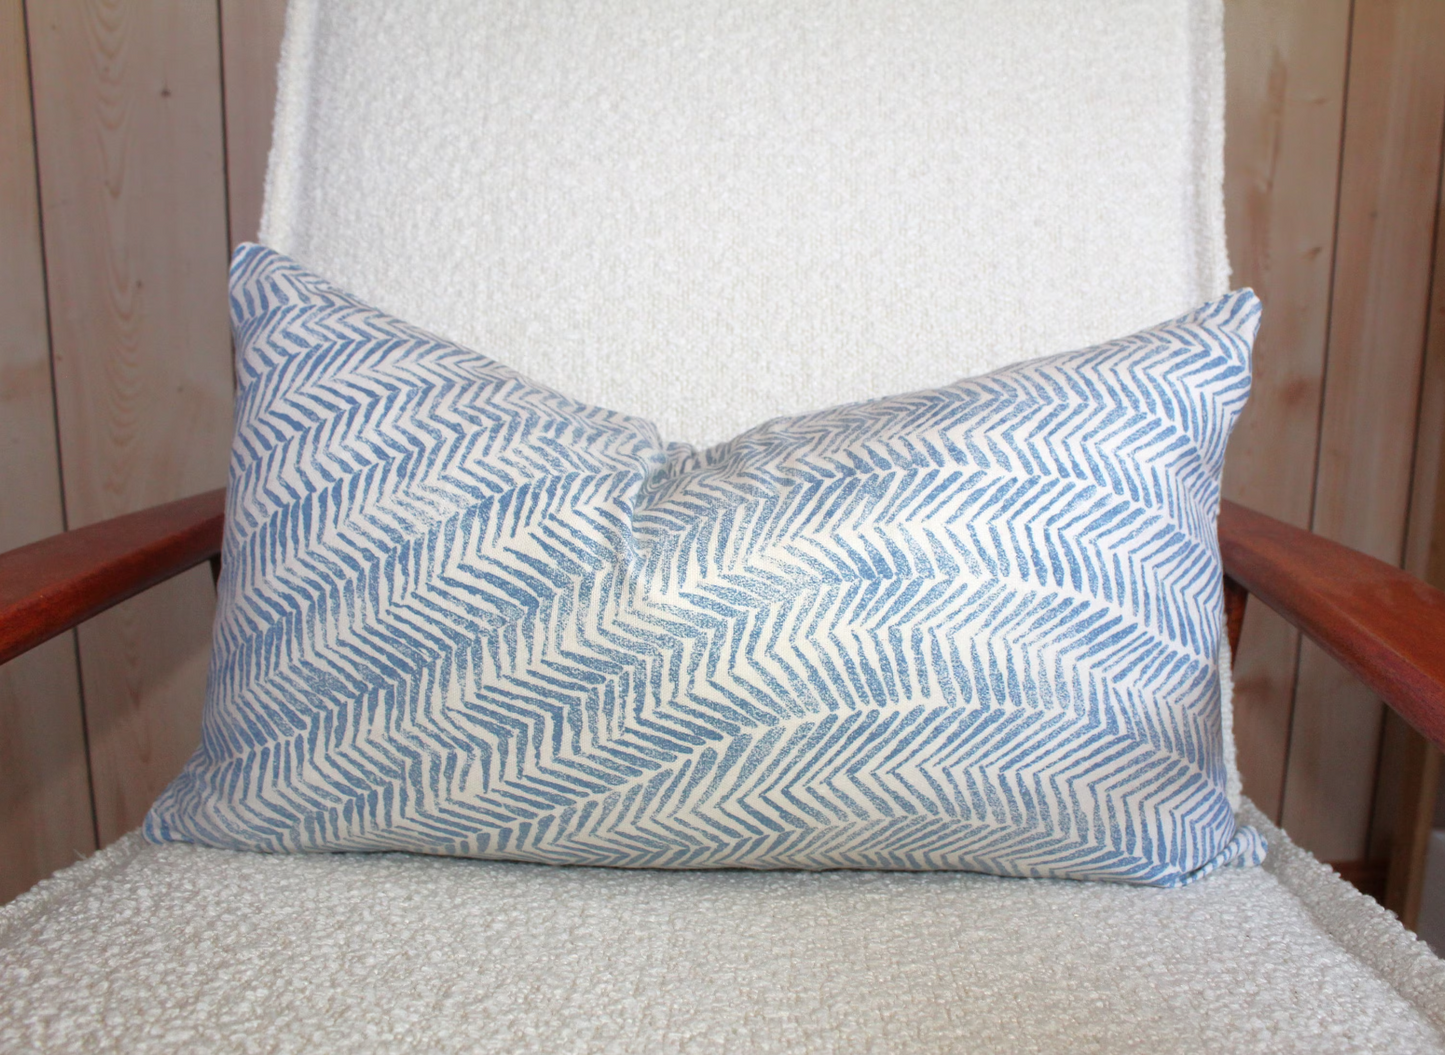 Wavy Ocean Leaves Cushion Covers P Kaufmann Fabric CLEARANCE SALE